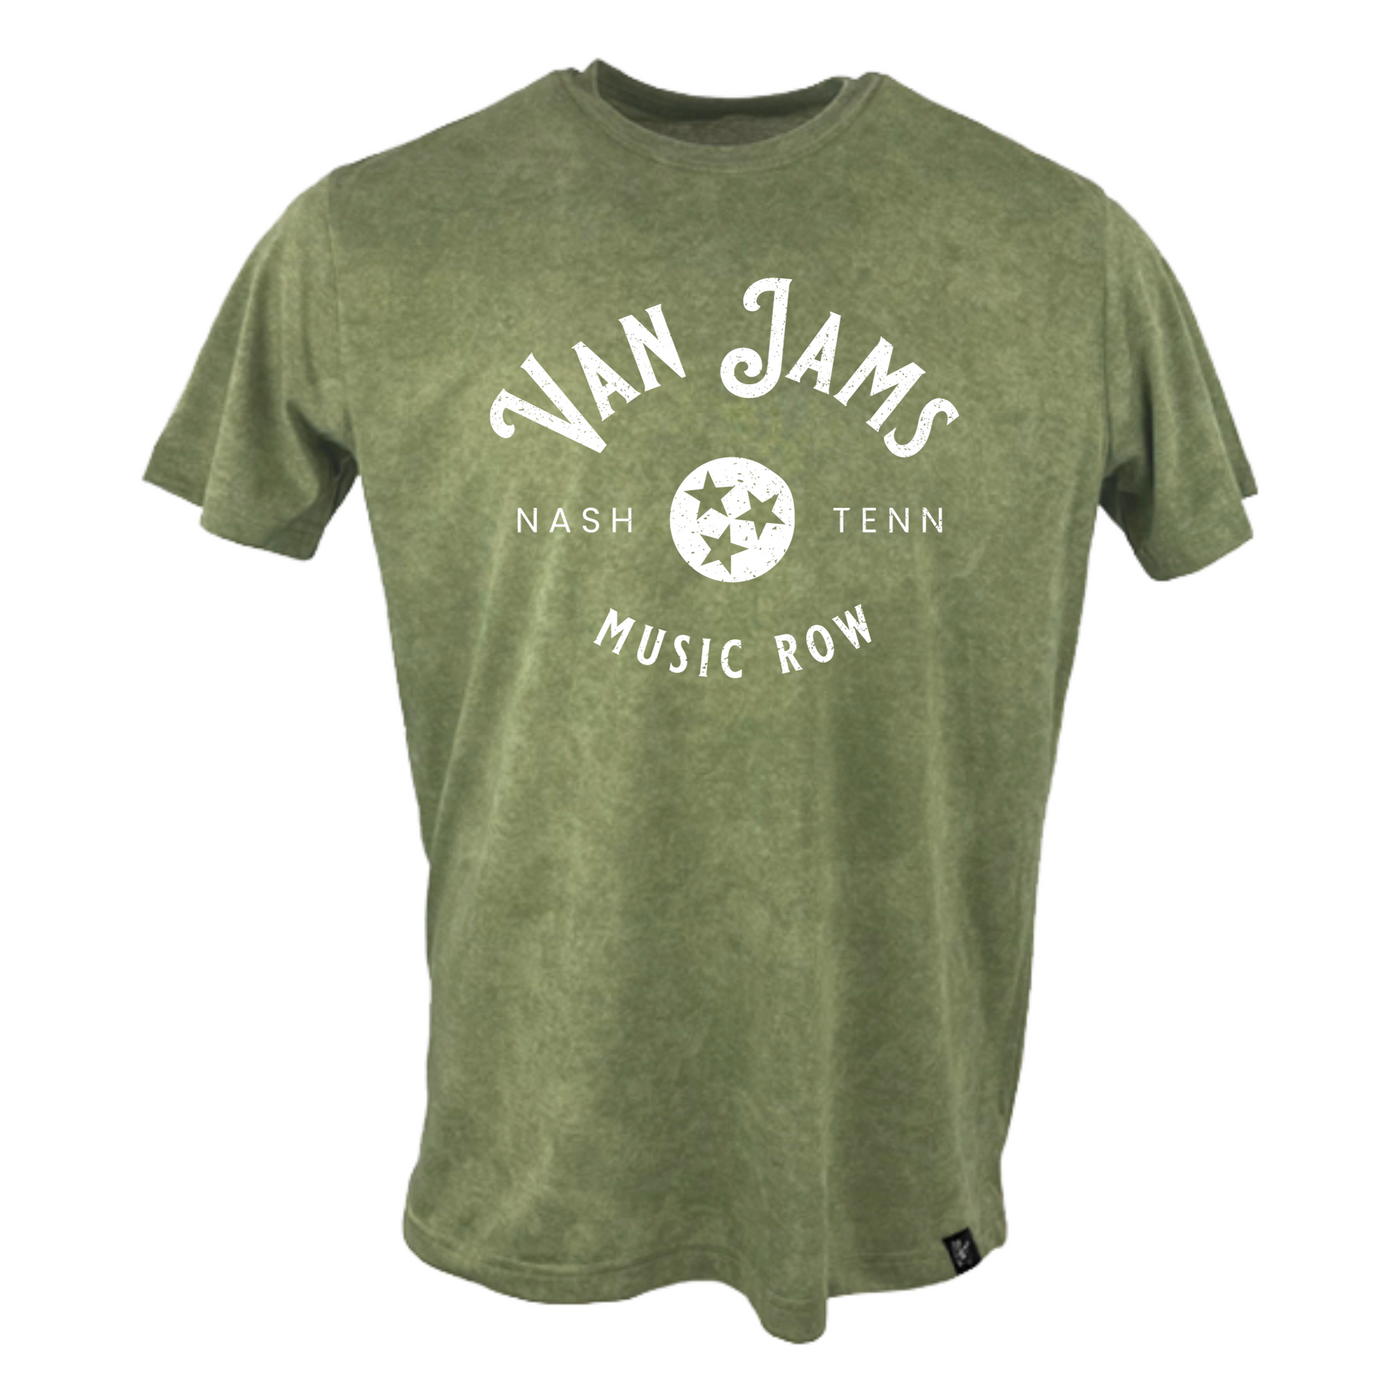 Van Jams - Classic Logo T-Shirt: Vintage Geen